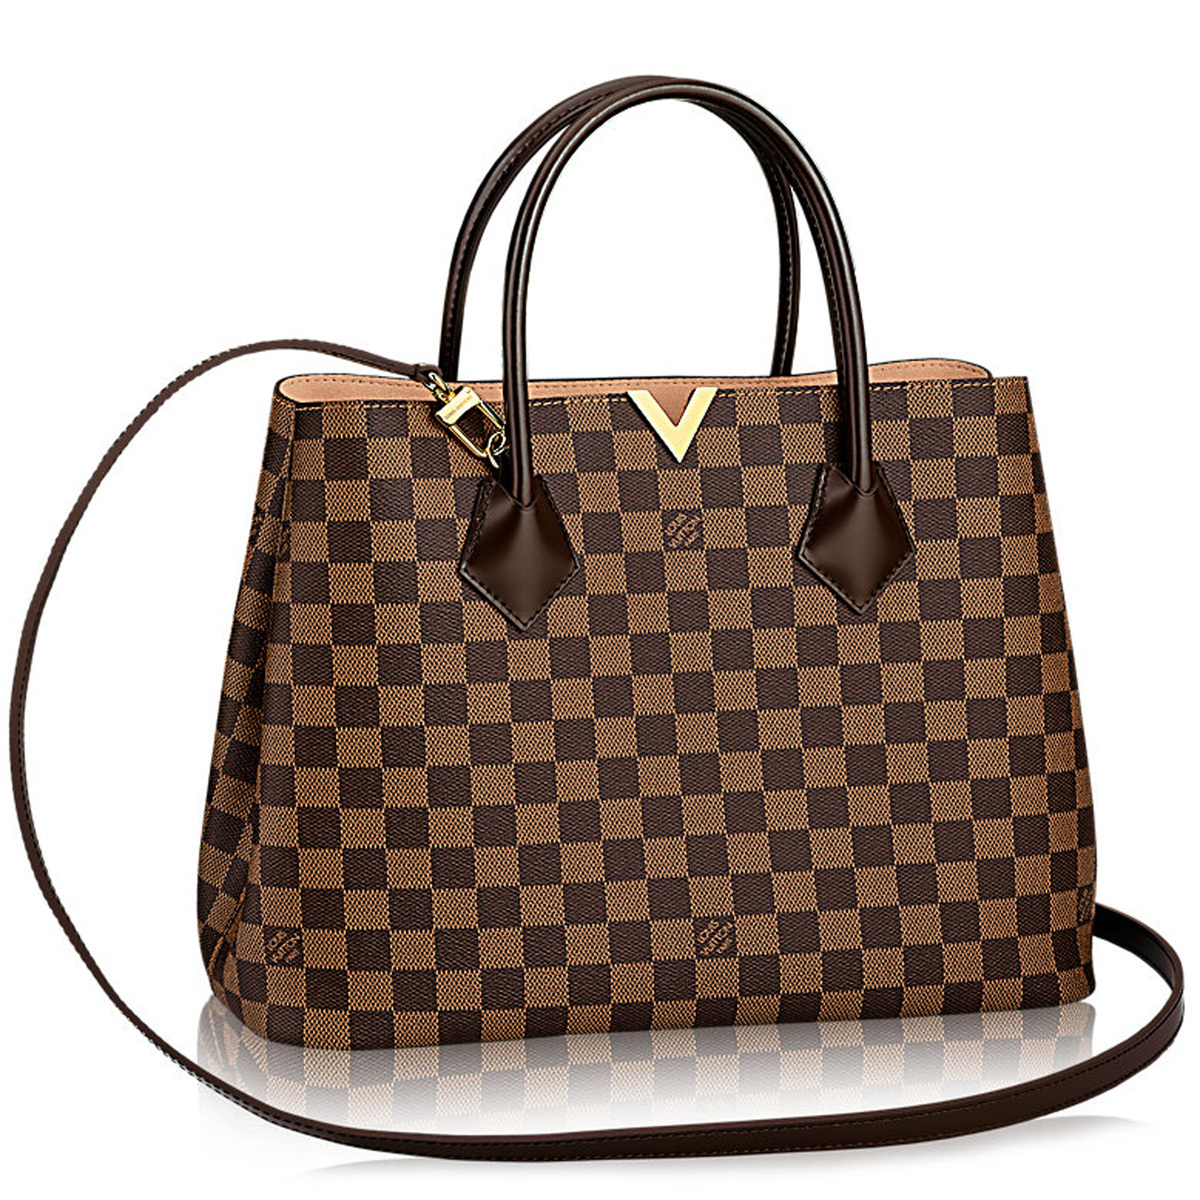 LV tote bag louis vuitton womens bag shoulder bag discount handbags best replica bags online ...